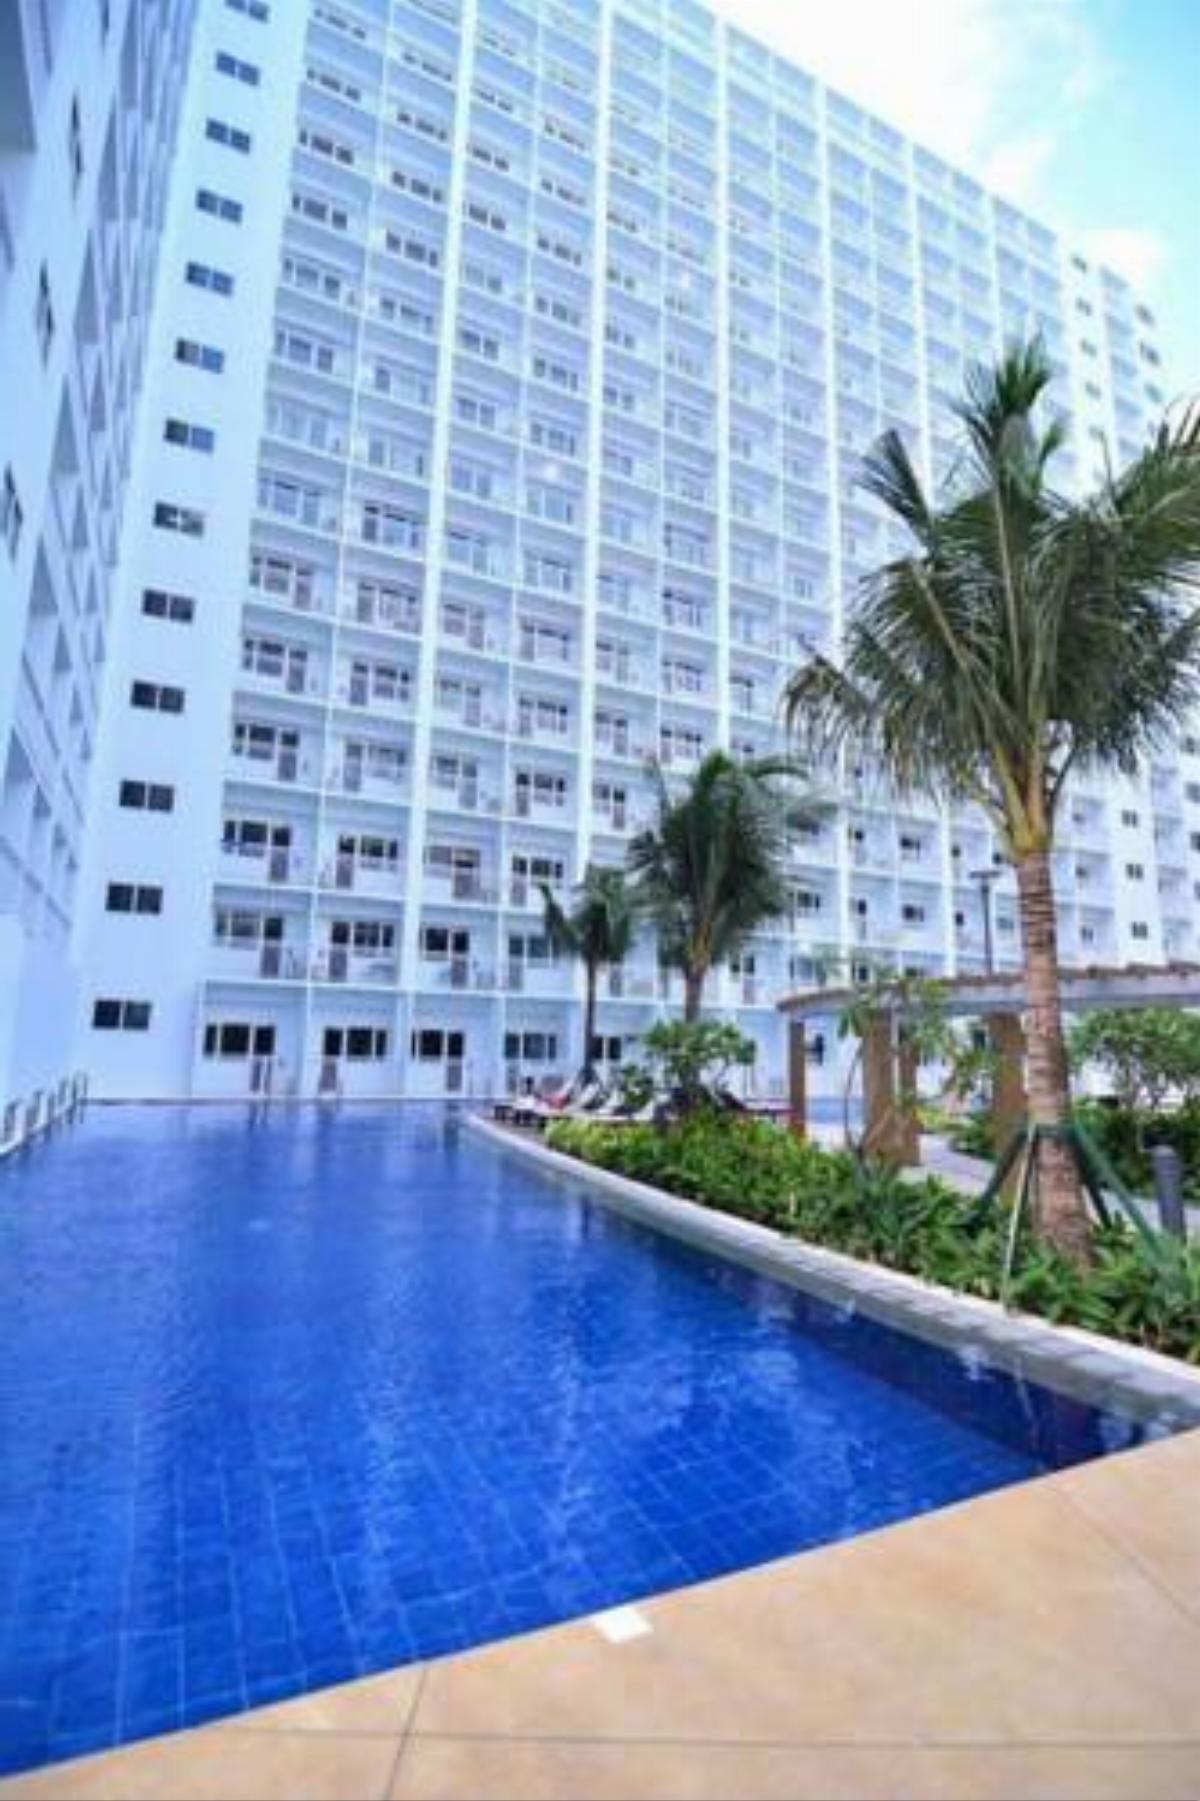 5 Star-Luxury Condo @Shore near MOA, NAIA & Casino Hotel Manila Philippines